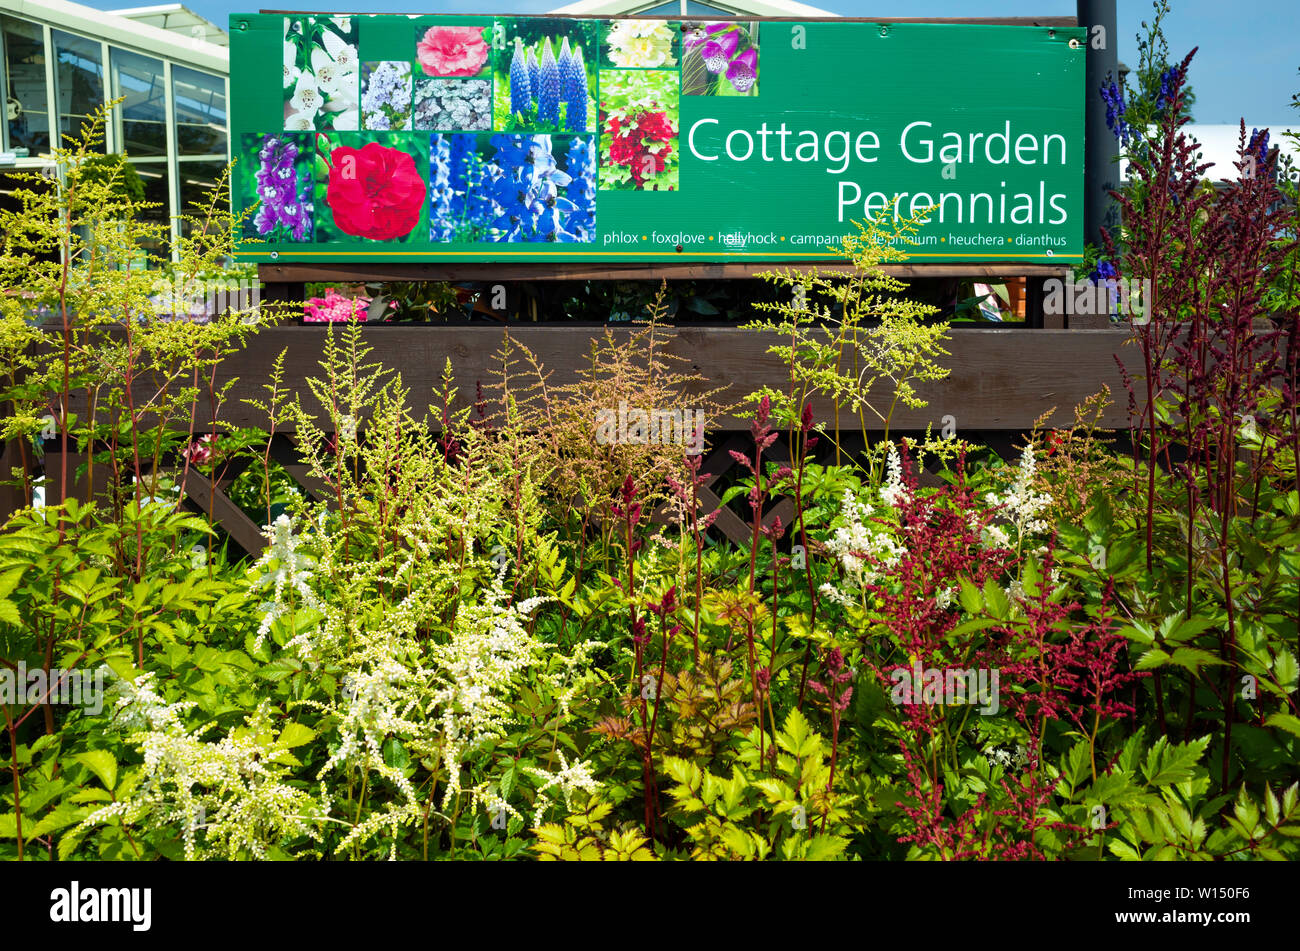 Garden Centre display of Cottage Garden perennials including phlox foxglove campanula and dianthus Stock Photo